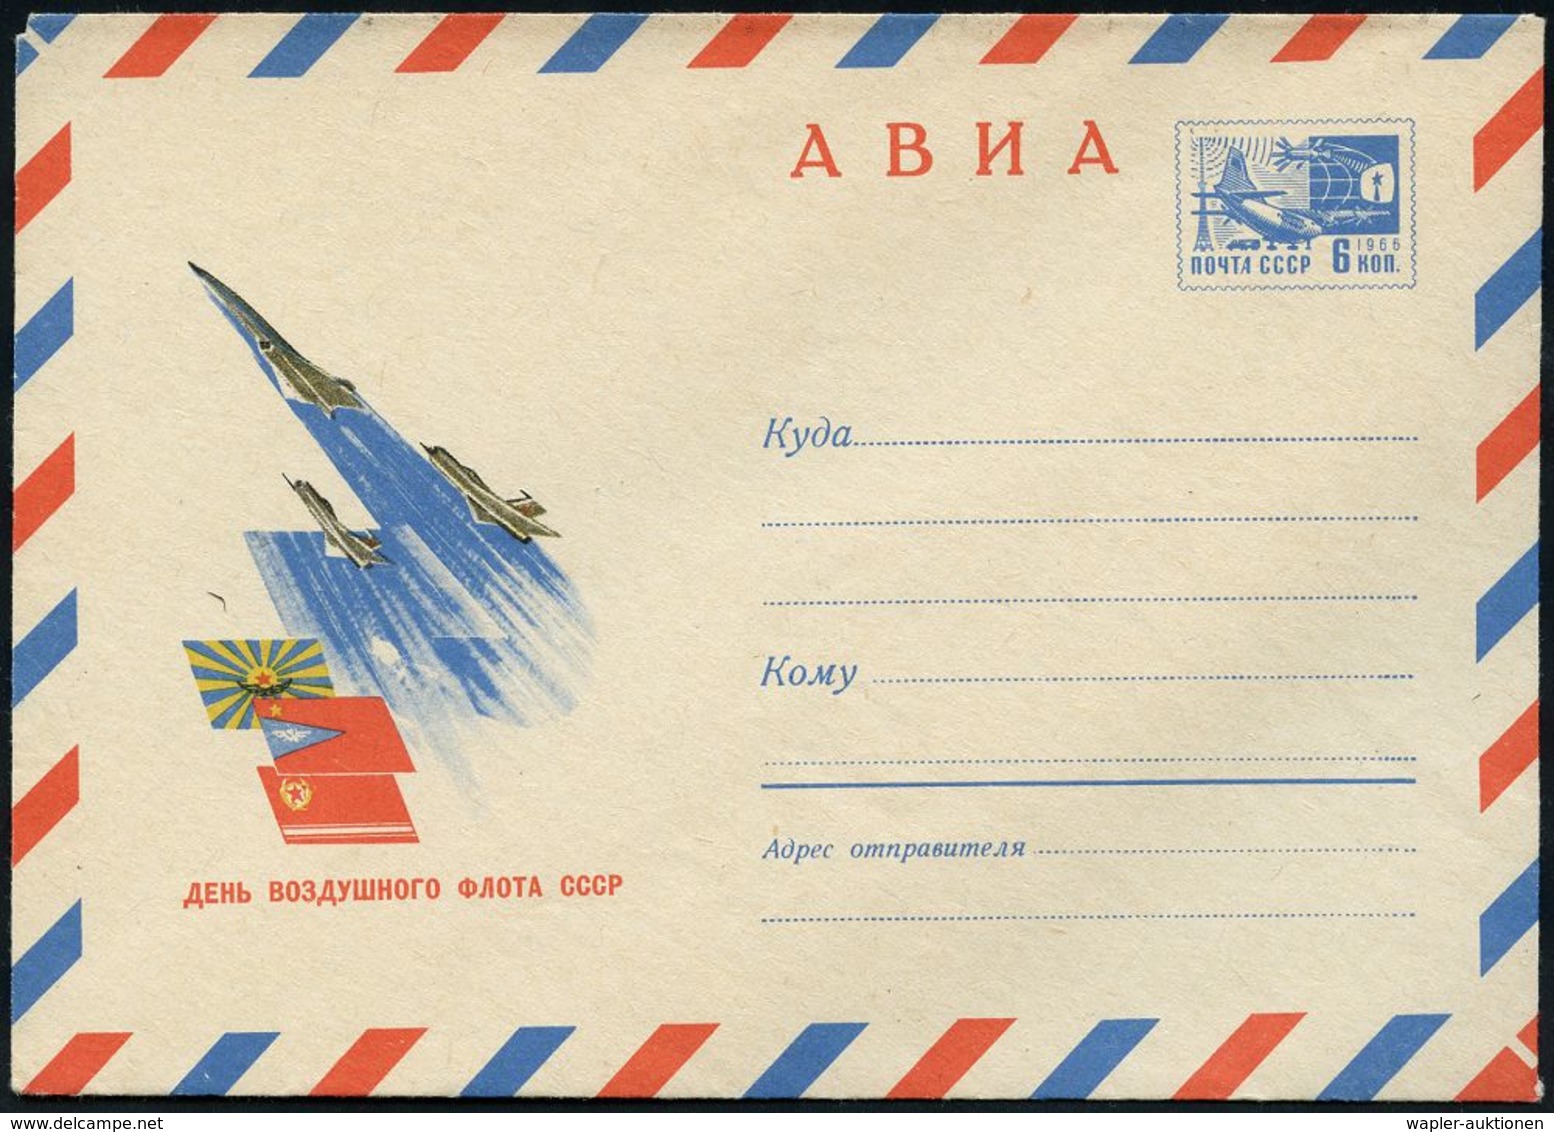 MILITÄRFLUGWESEN / MILITÄRFLUGZEUGE : UdSSR 1969 6 Kop. LU Luft- U. Raumfahrt, Blau: Tag Der Sowjet. Luftflotte = Übersc - Airplanes